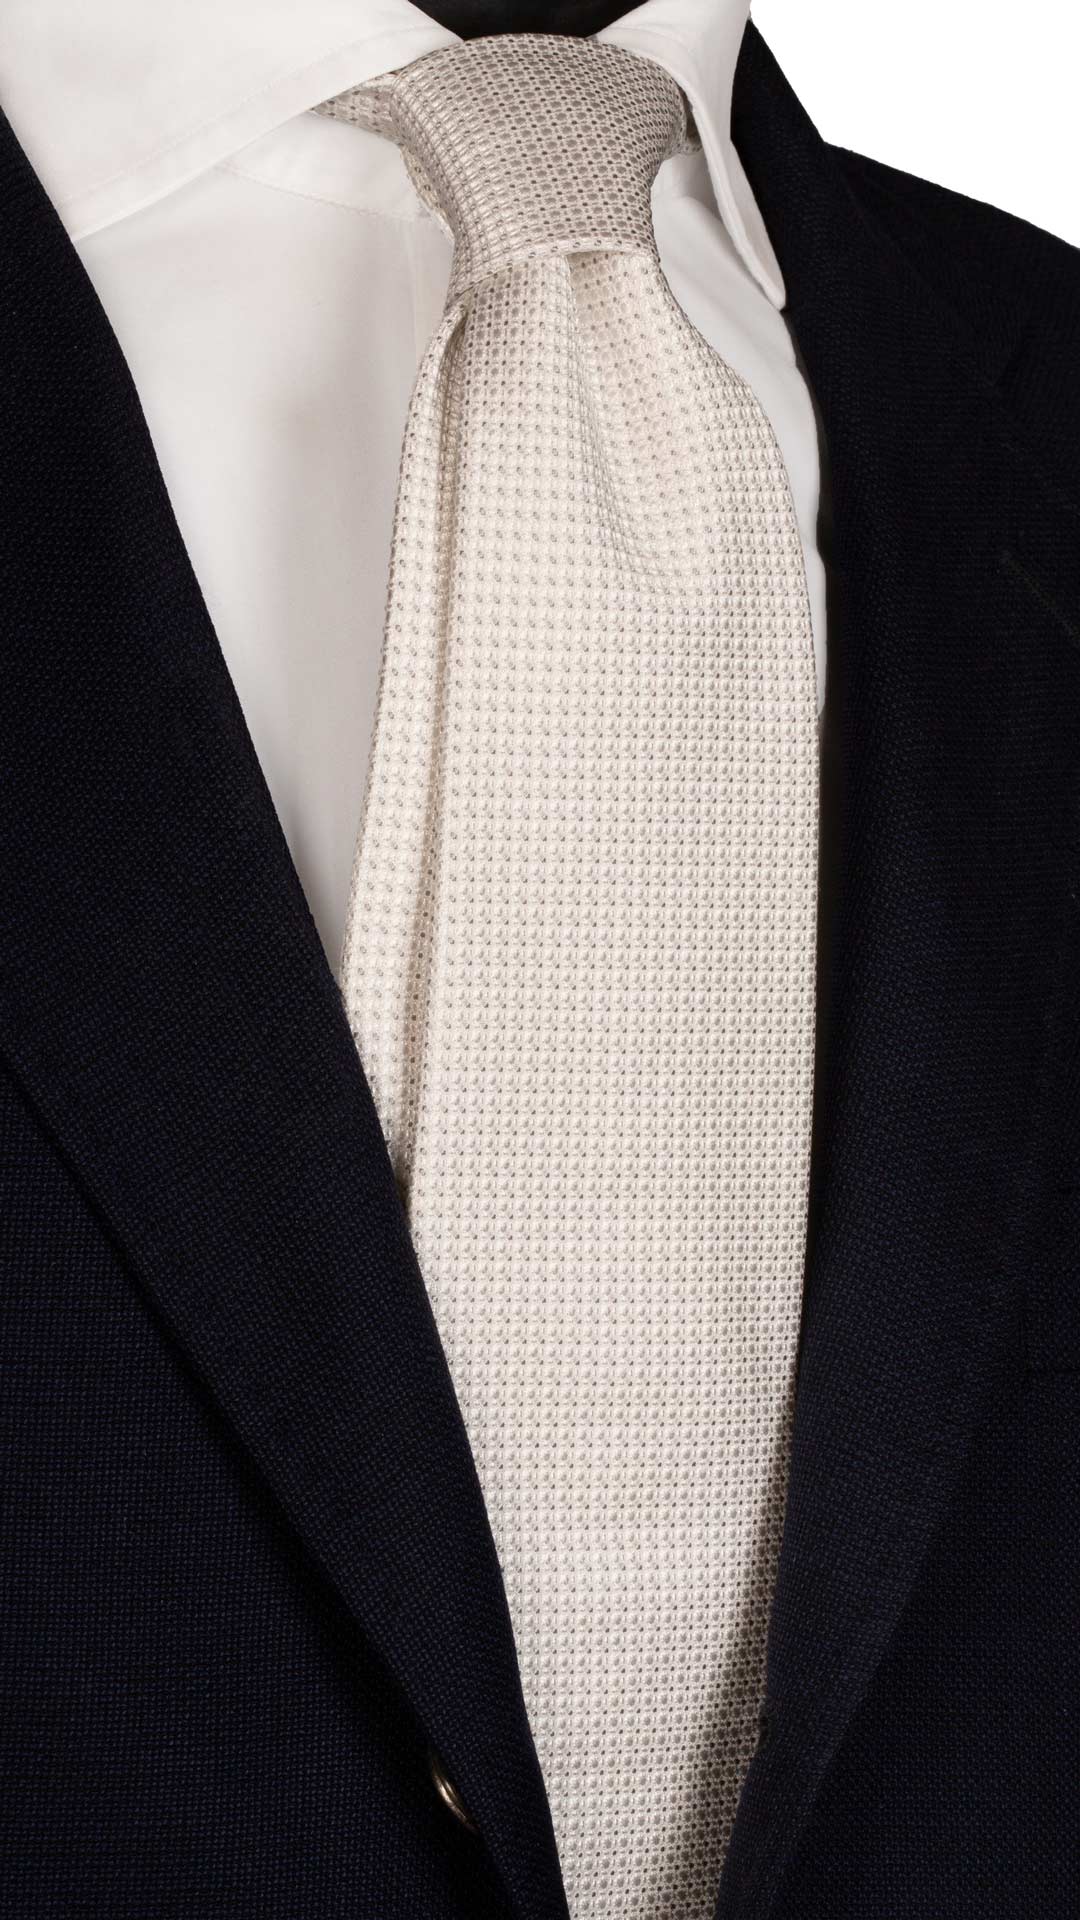 Cravatta da Cerimonia di Seta Bianco Panna Fantasia Grigia Made in Italy Graffeo Cravatte